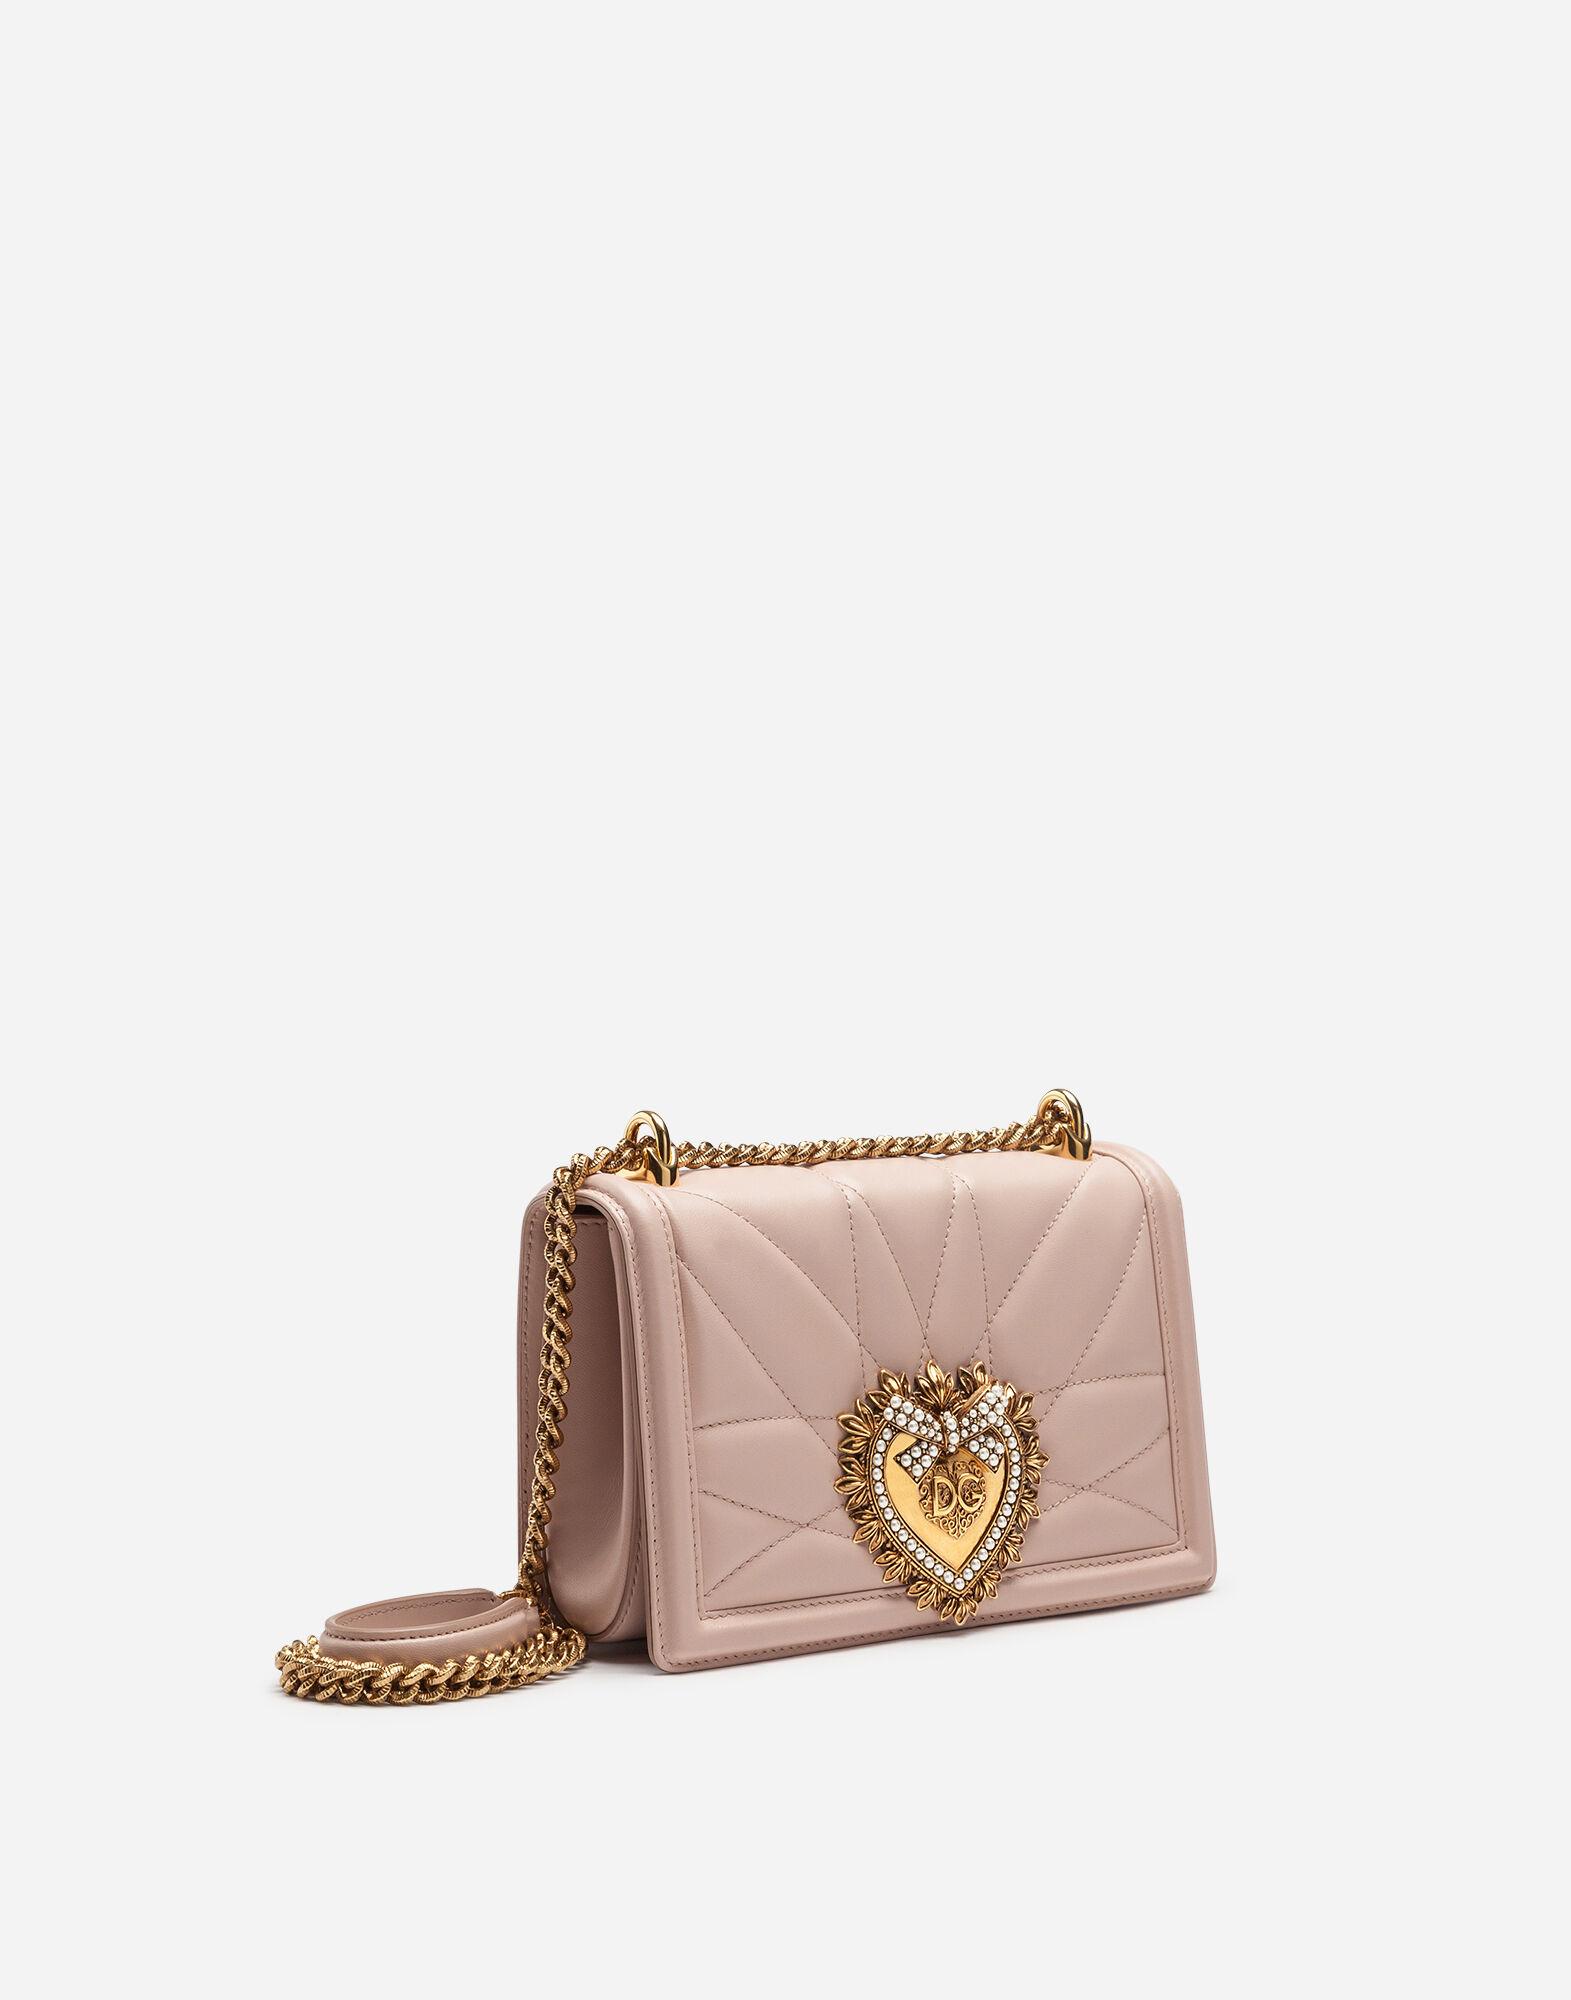 Dolce & Gabbana Leather Medium Devotion Bag in Pale Pink (Pink) - Lyst